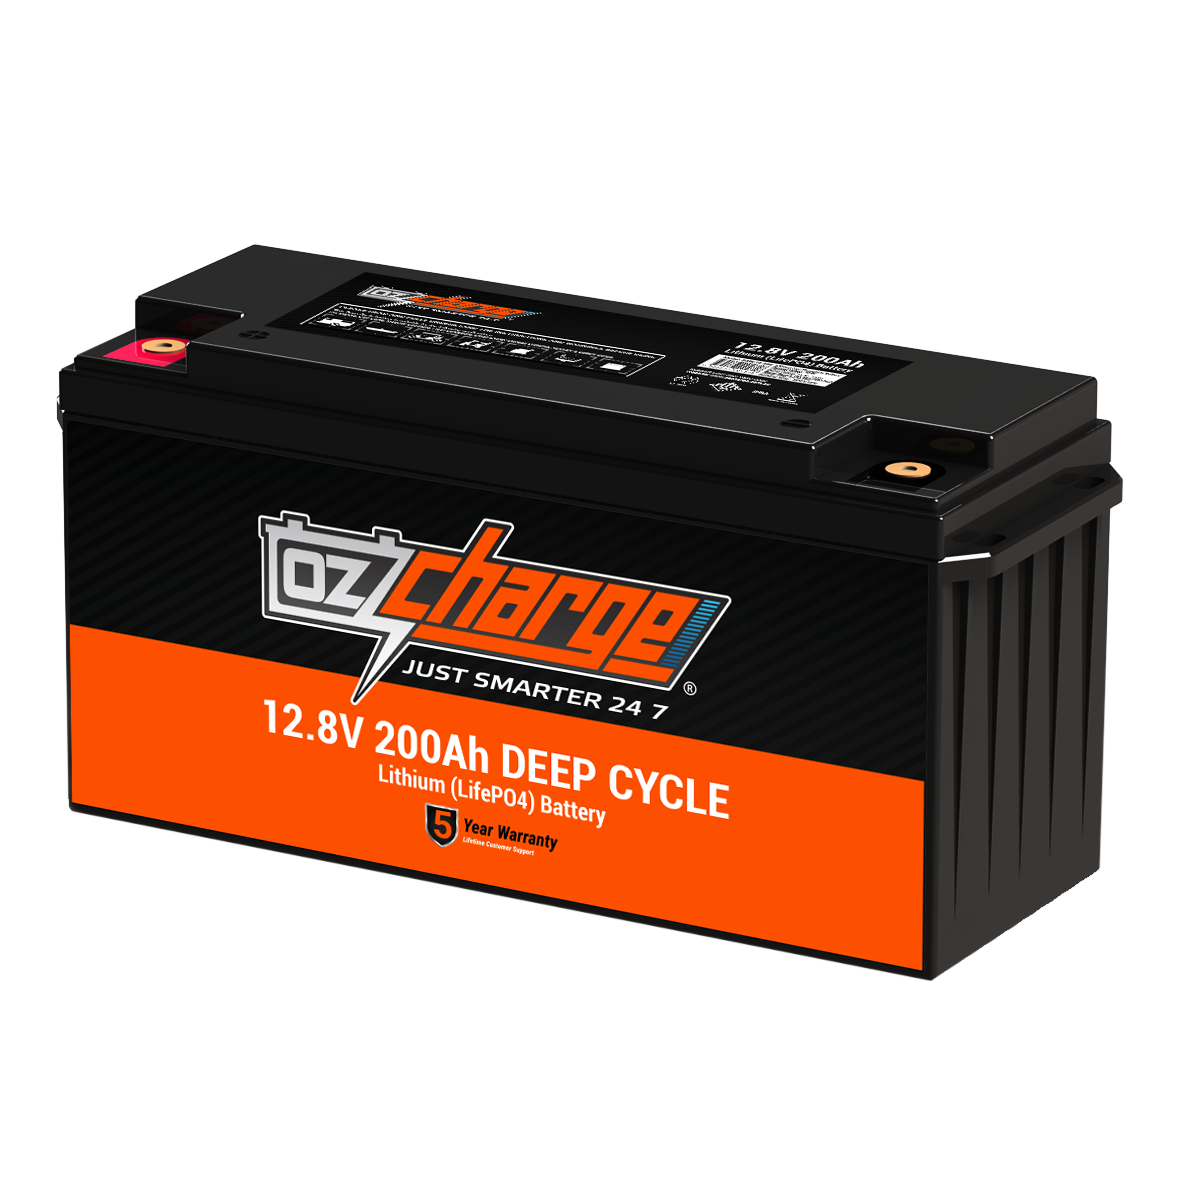 OzCharge 12V 200Ah Lithium LifePO4 Deep Cycle Battery